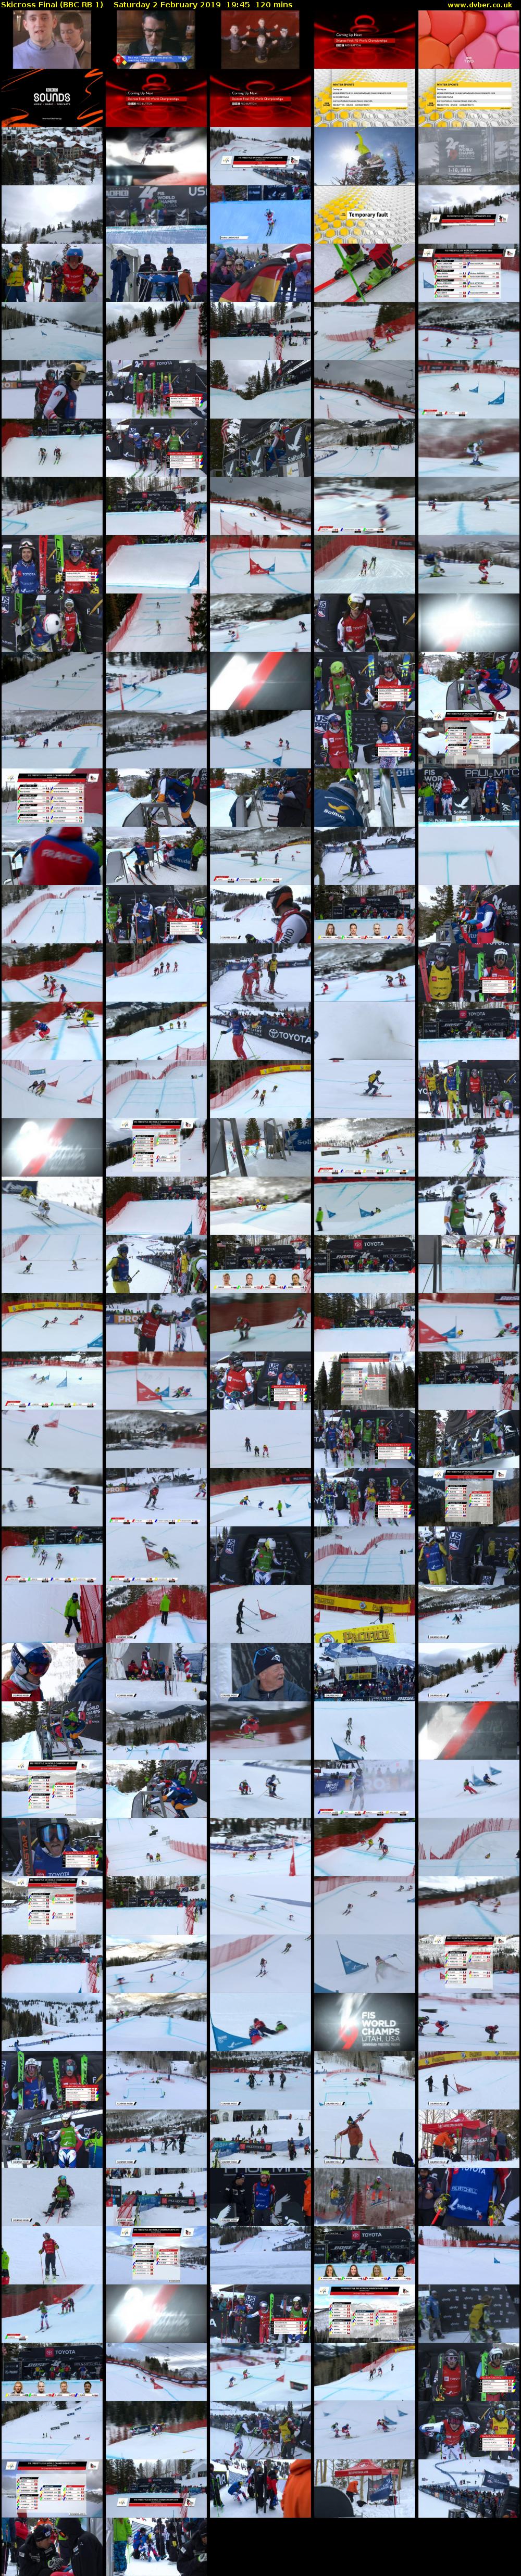 Skicross Final (BBC RB 1) Saturday 2 February 2019 19:45 - 21:45